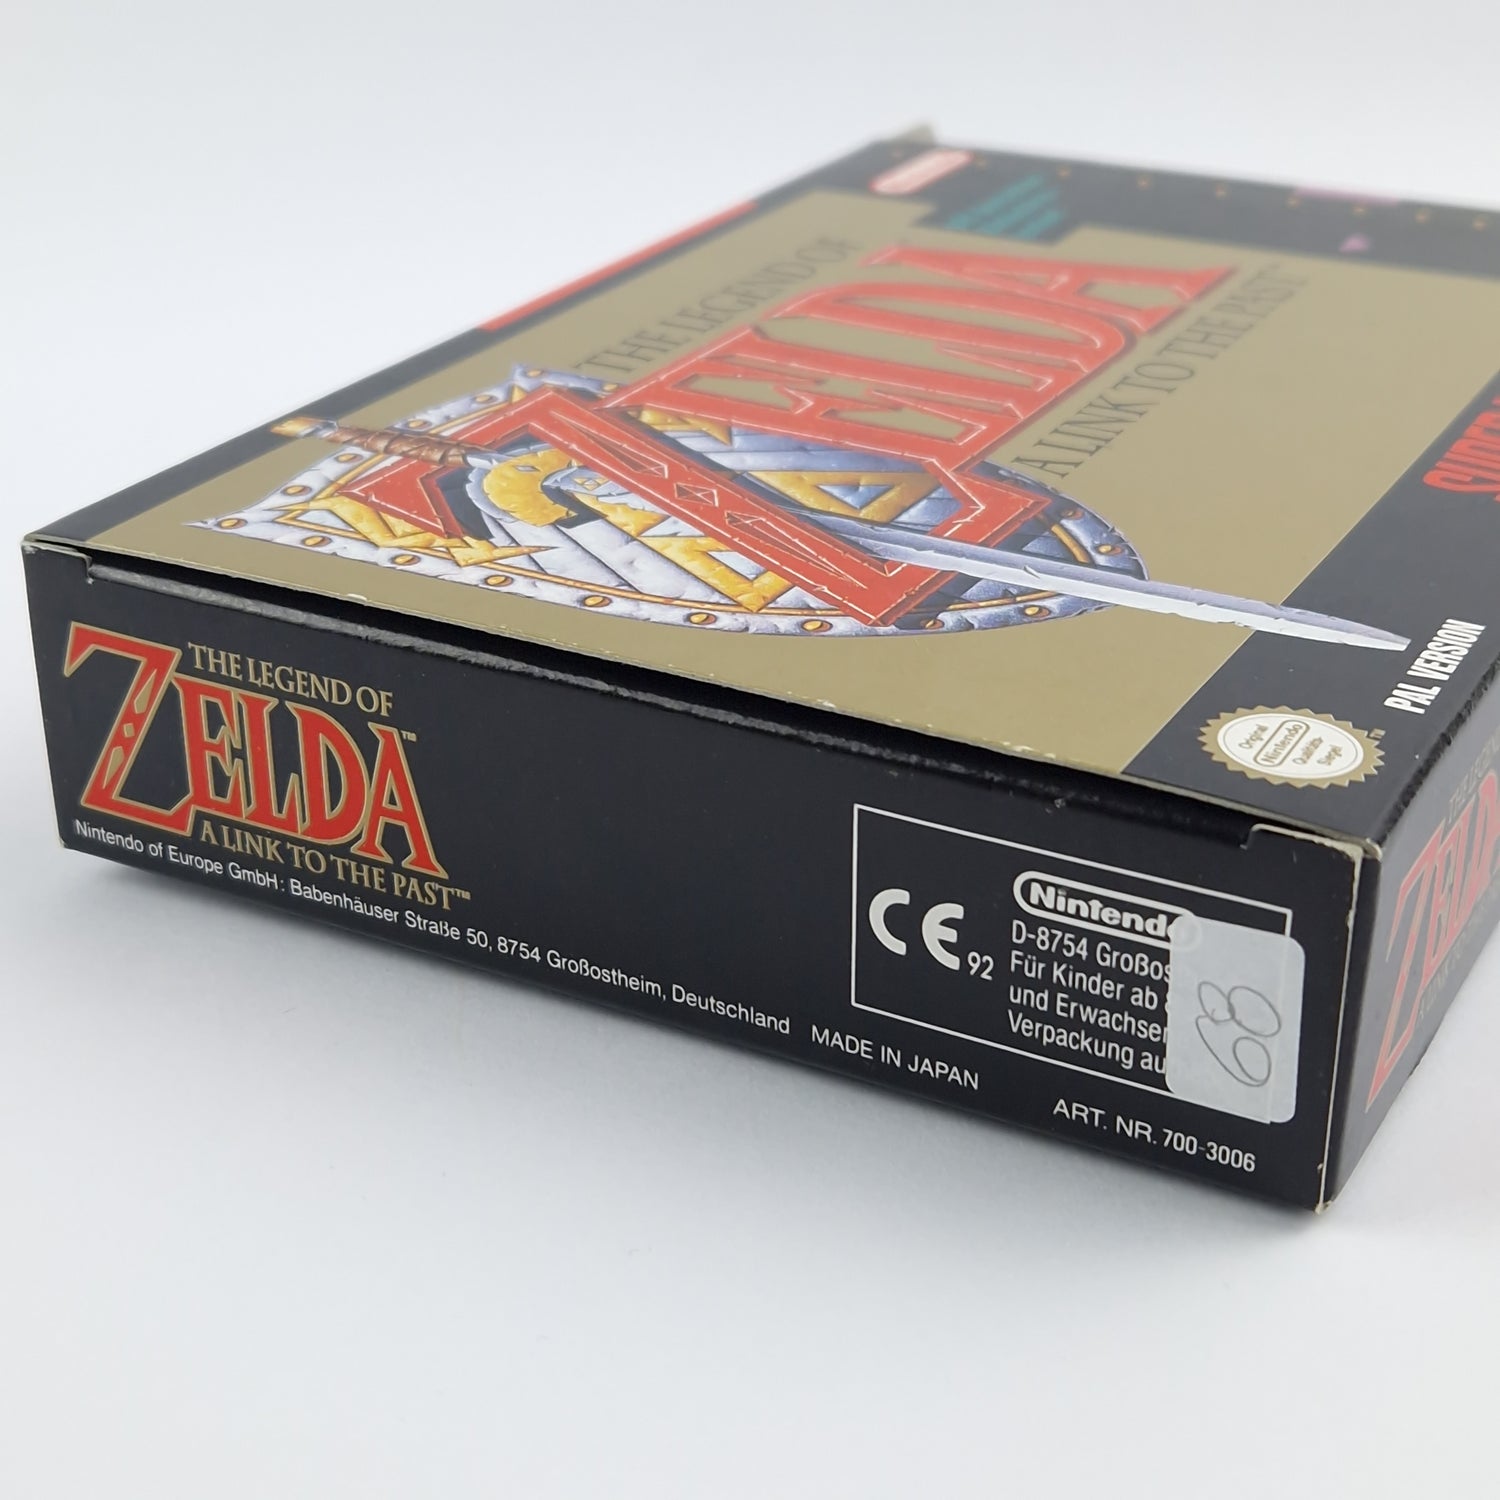 Super Nintendo Spiel : Zelda a link to the Past - Modul Anleitung OVP CIB SNES